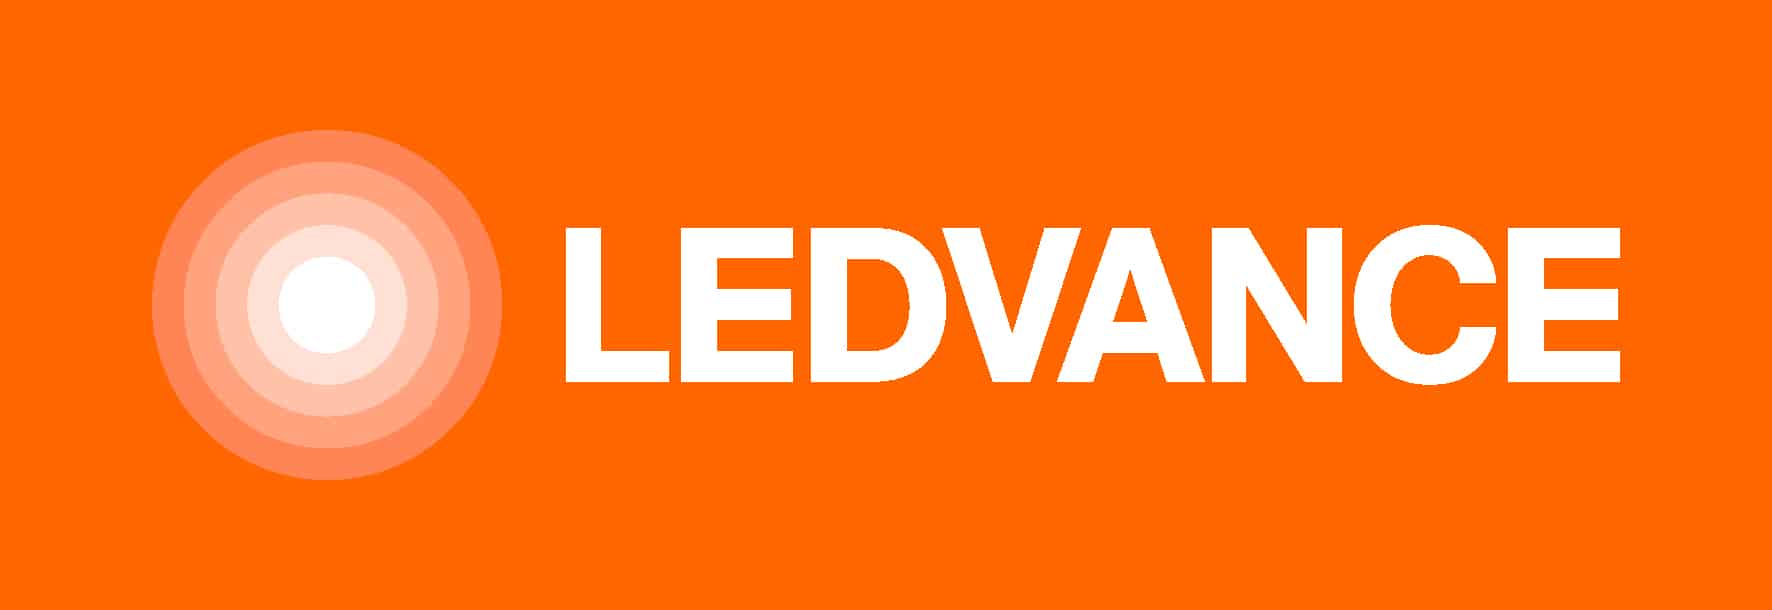 Logo de Ledvance